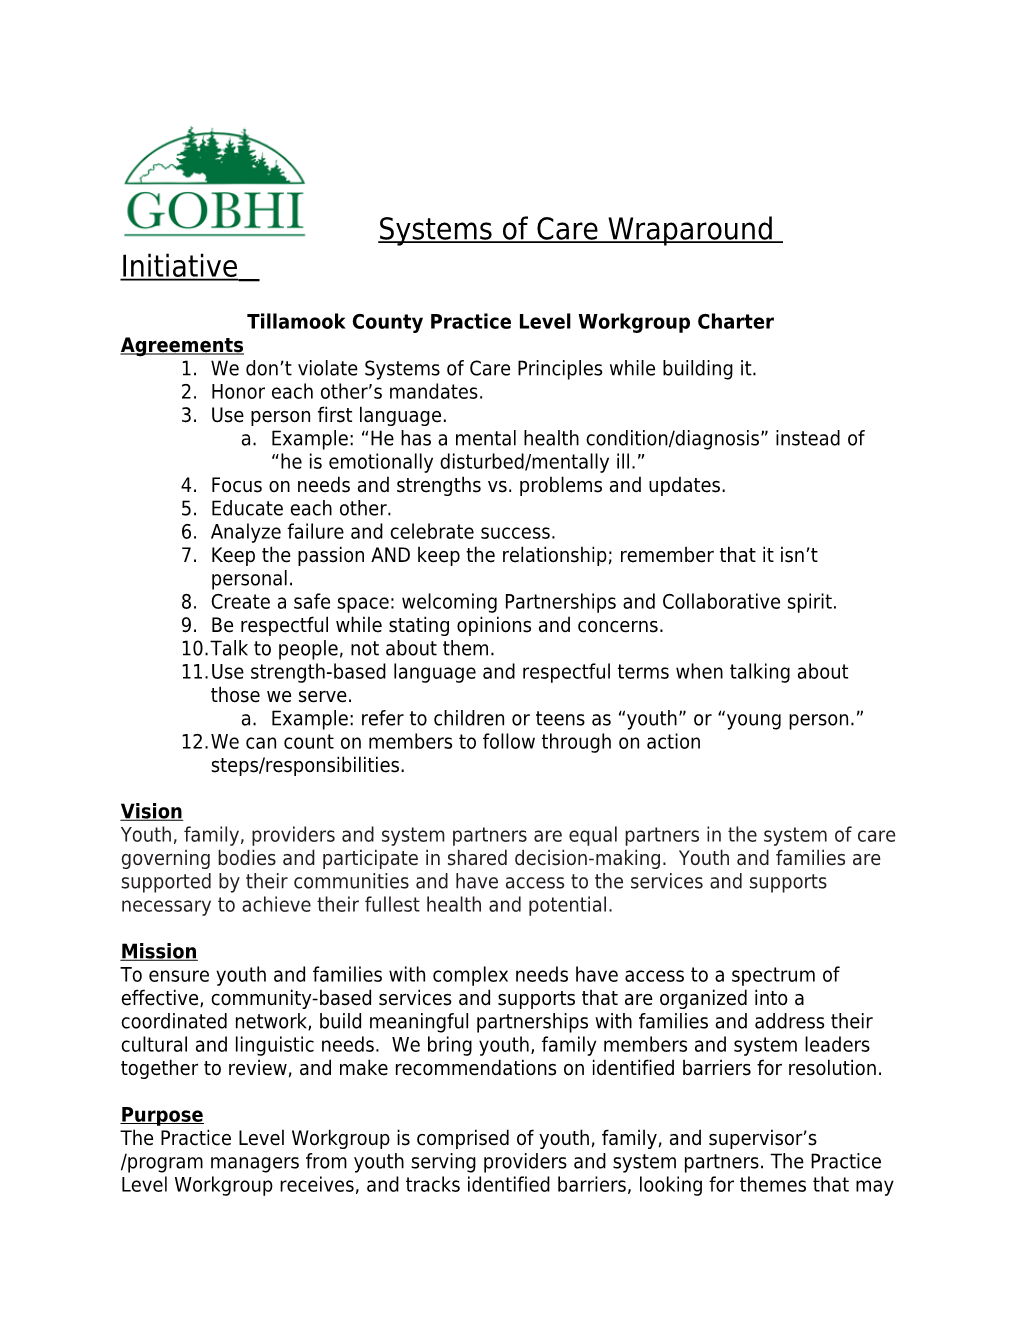 Washington County System of Care